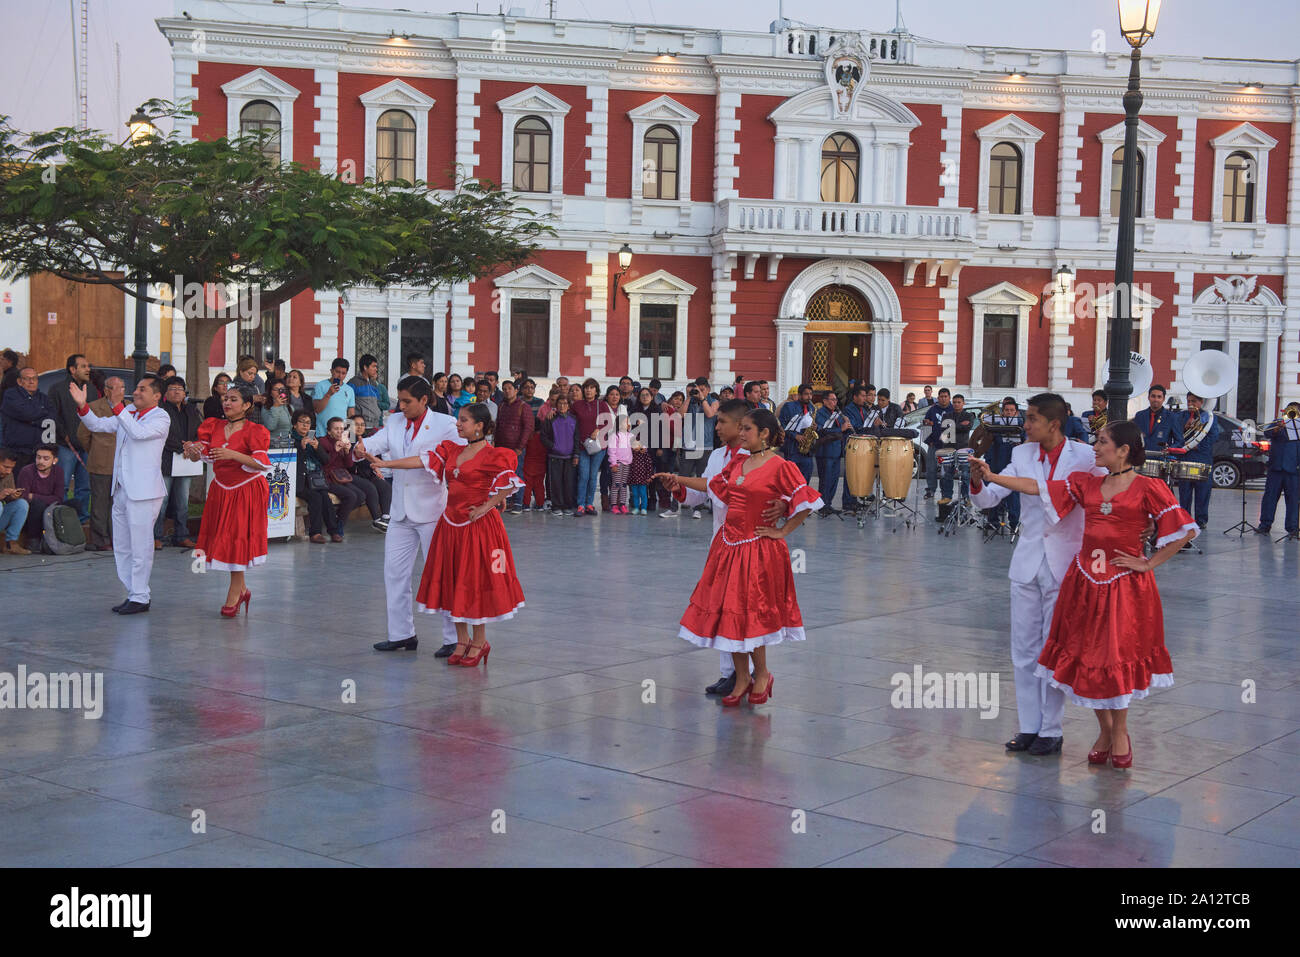 Dancing in the historic Plaza de Armas in Trujillo, Peru Stock Photo